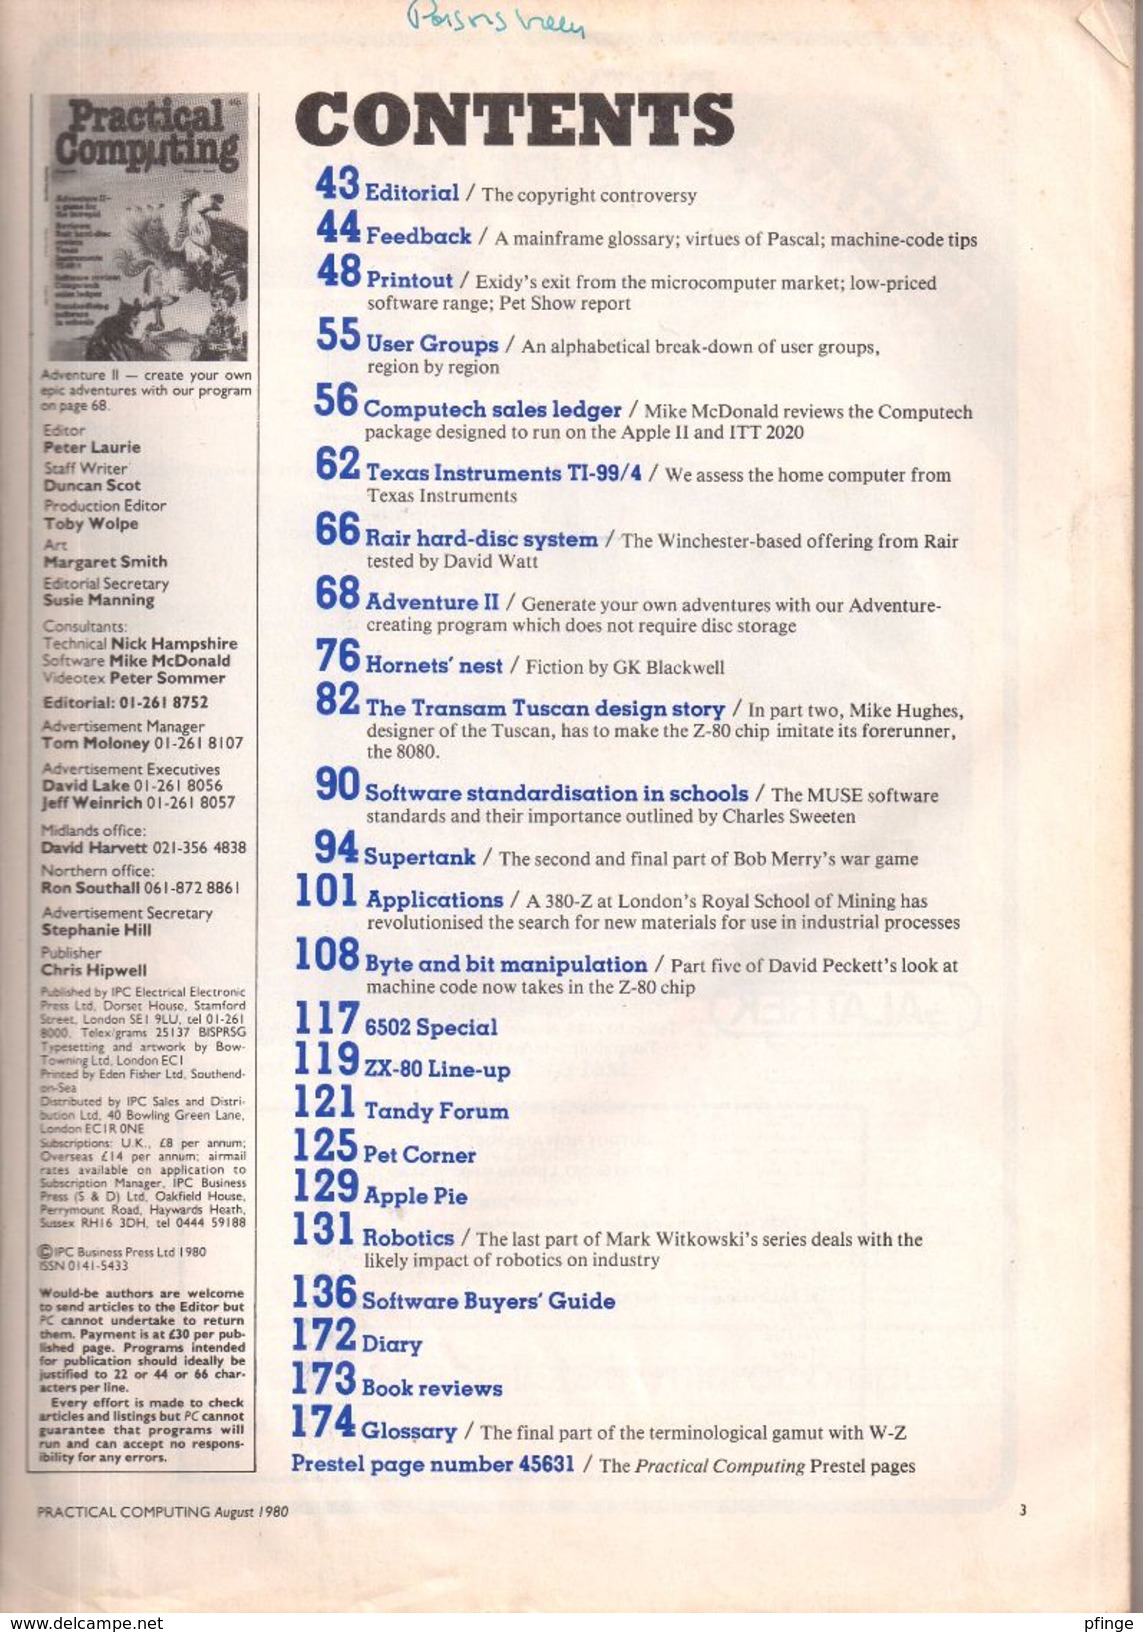 Practical Computing Vol 3 Issue 8, 1980 - Informática IT/Internet